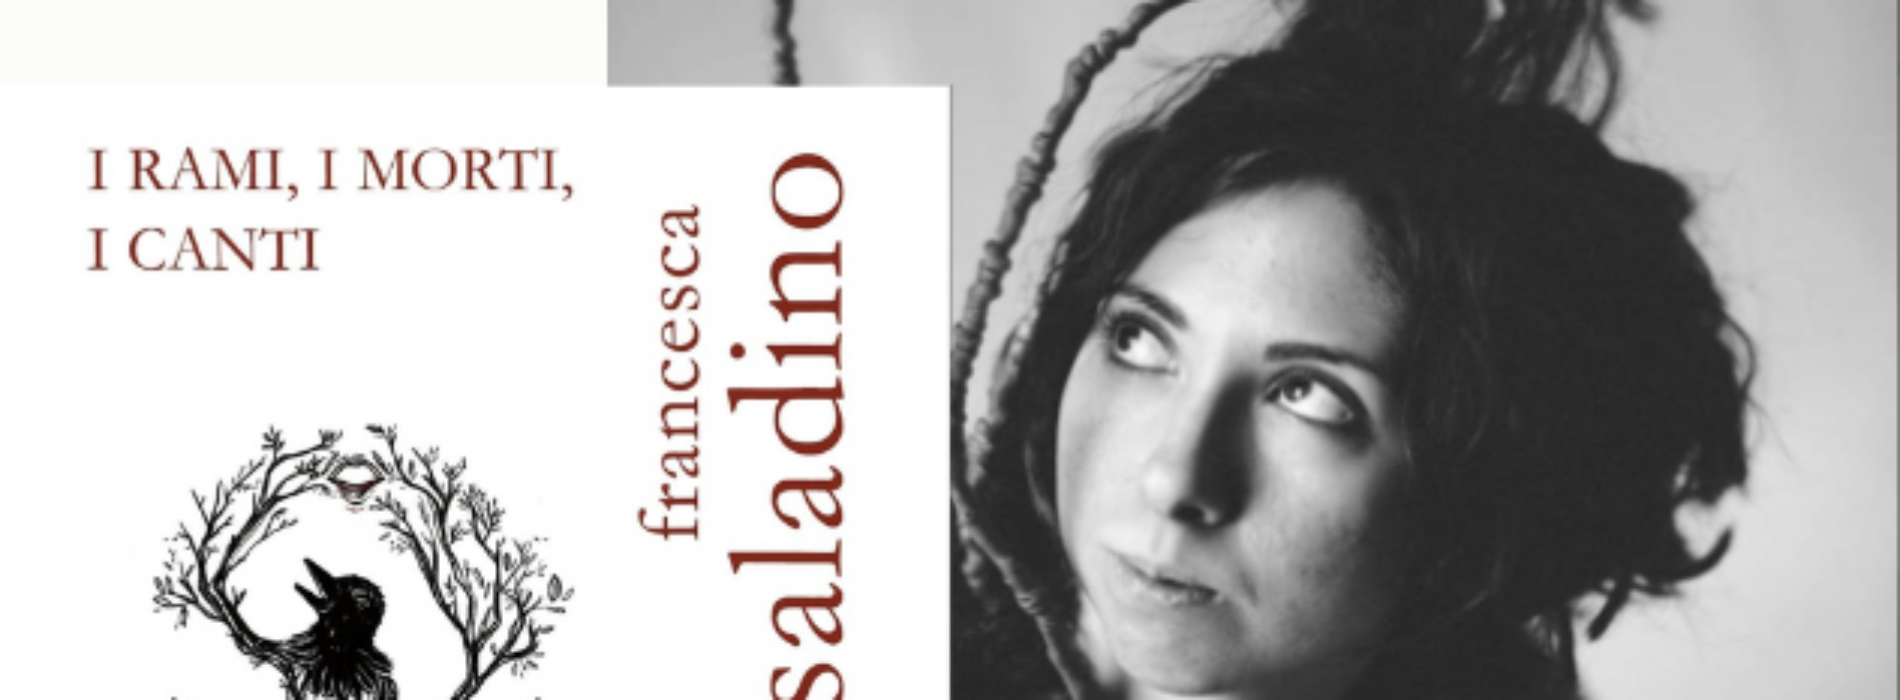 I rami, i morti, i canti. Francesca Saladino alla Feltrinelli